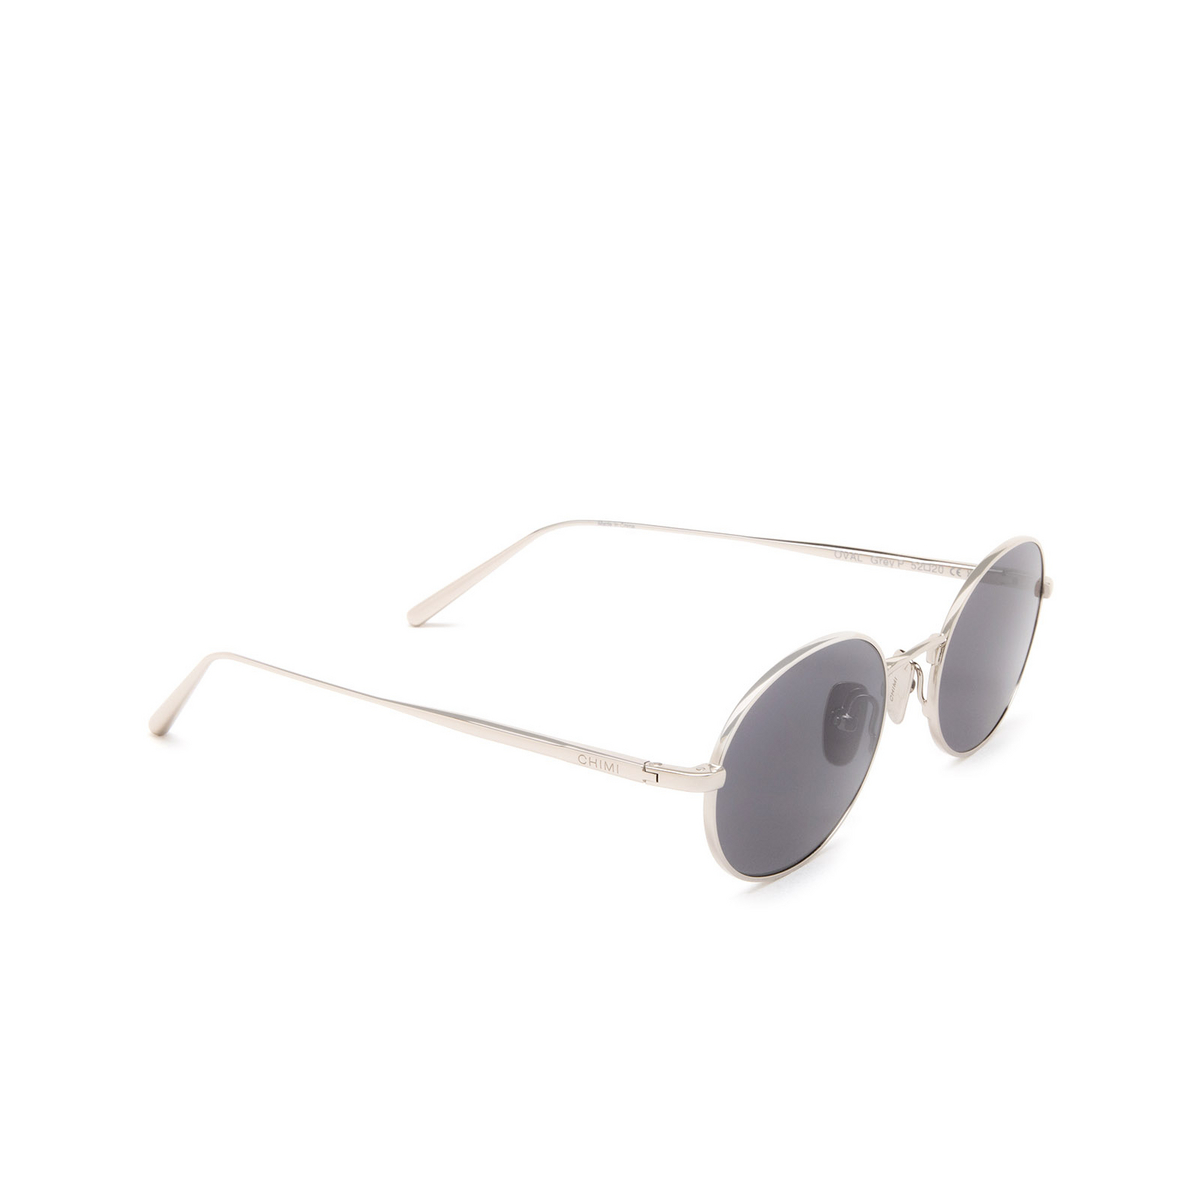 Chimi OVAL Sunglasses GREY - 2/4